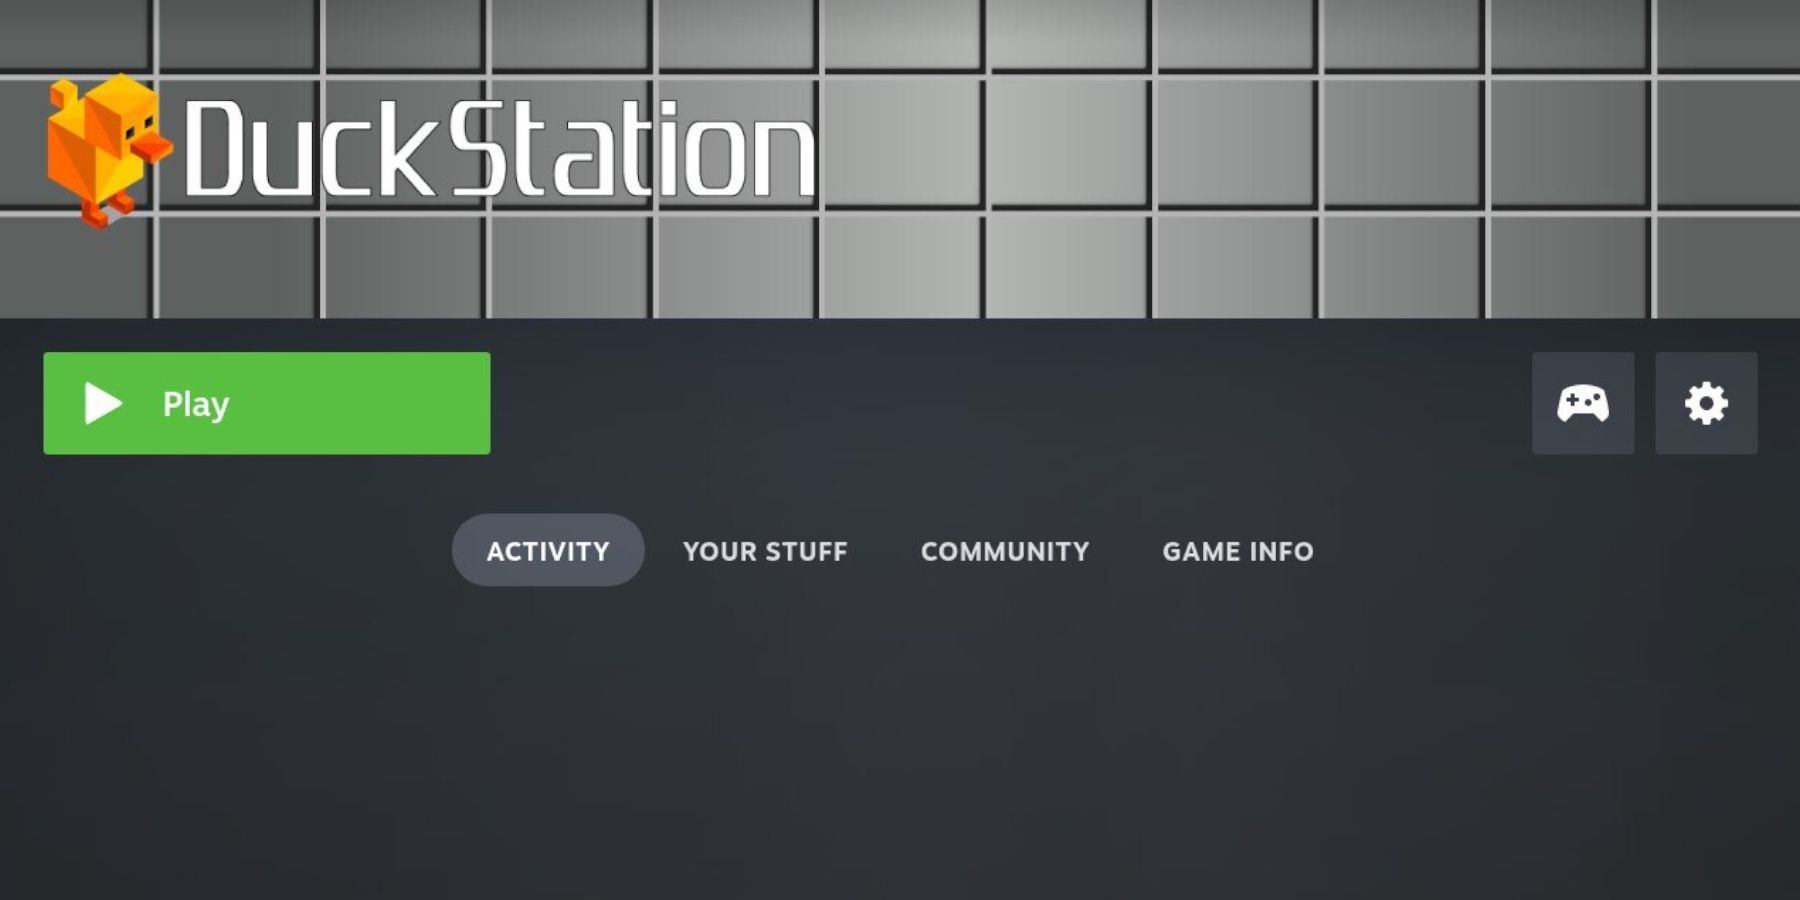 Steam Deck running the DuckStation Emulator